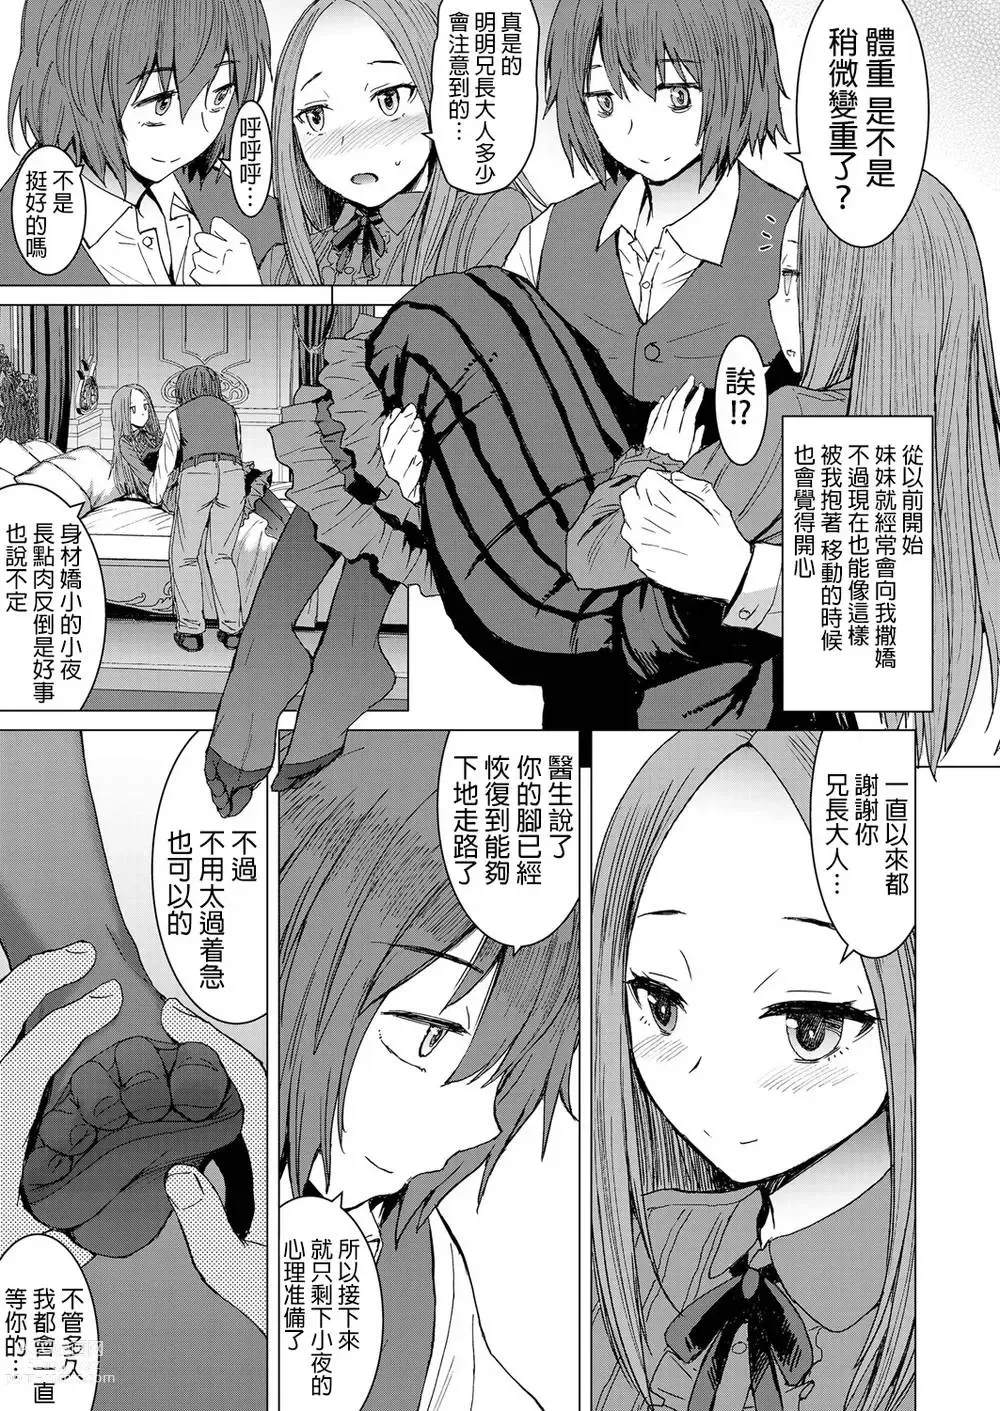 Page 5 of manga Aisarete Miru?